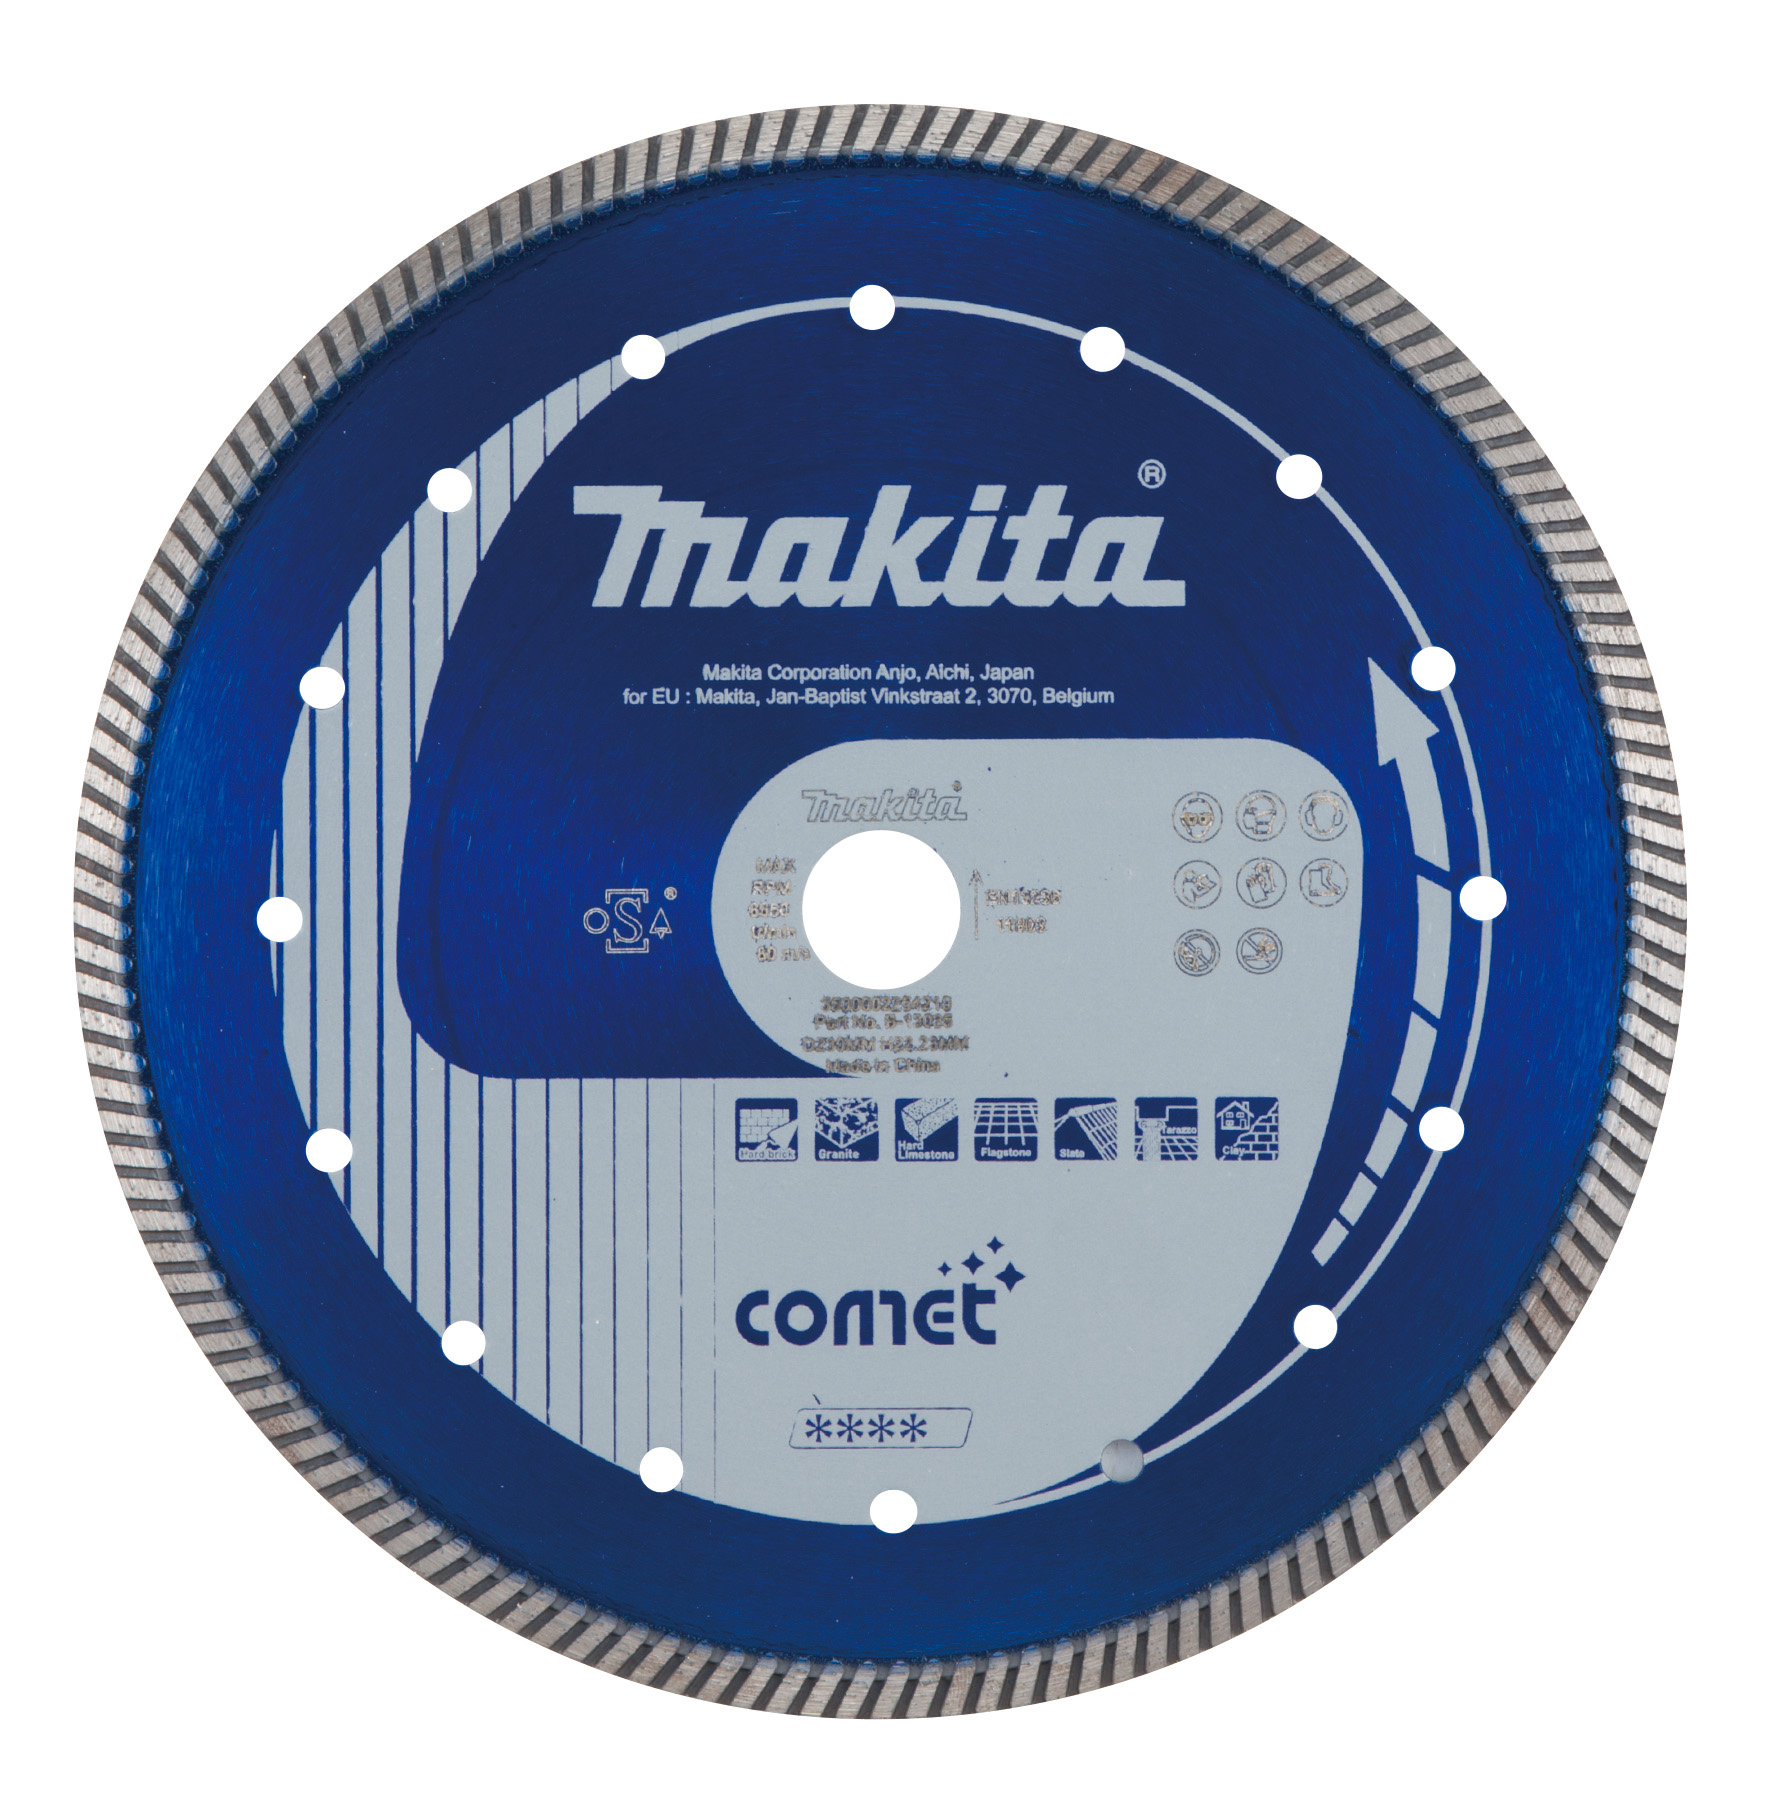 diamantový kotouč Comet Turbo 230/22,23mm Makita B-13035 + Dárek, servis bez starostí v hodnotě 300Kč